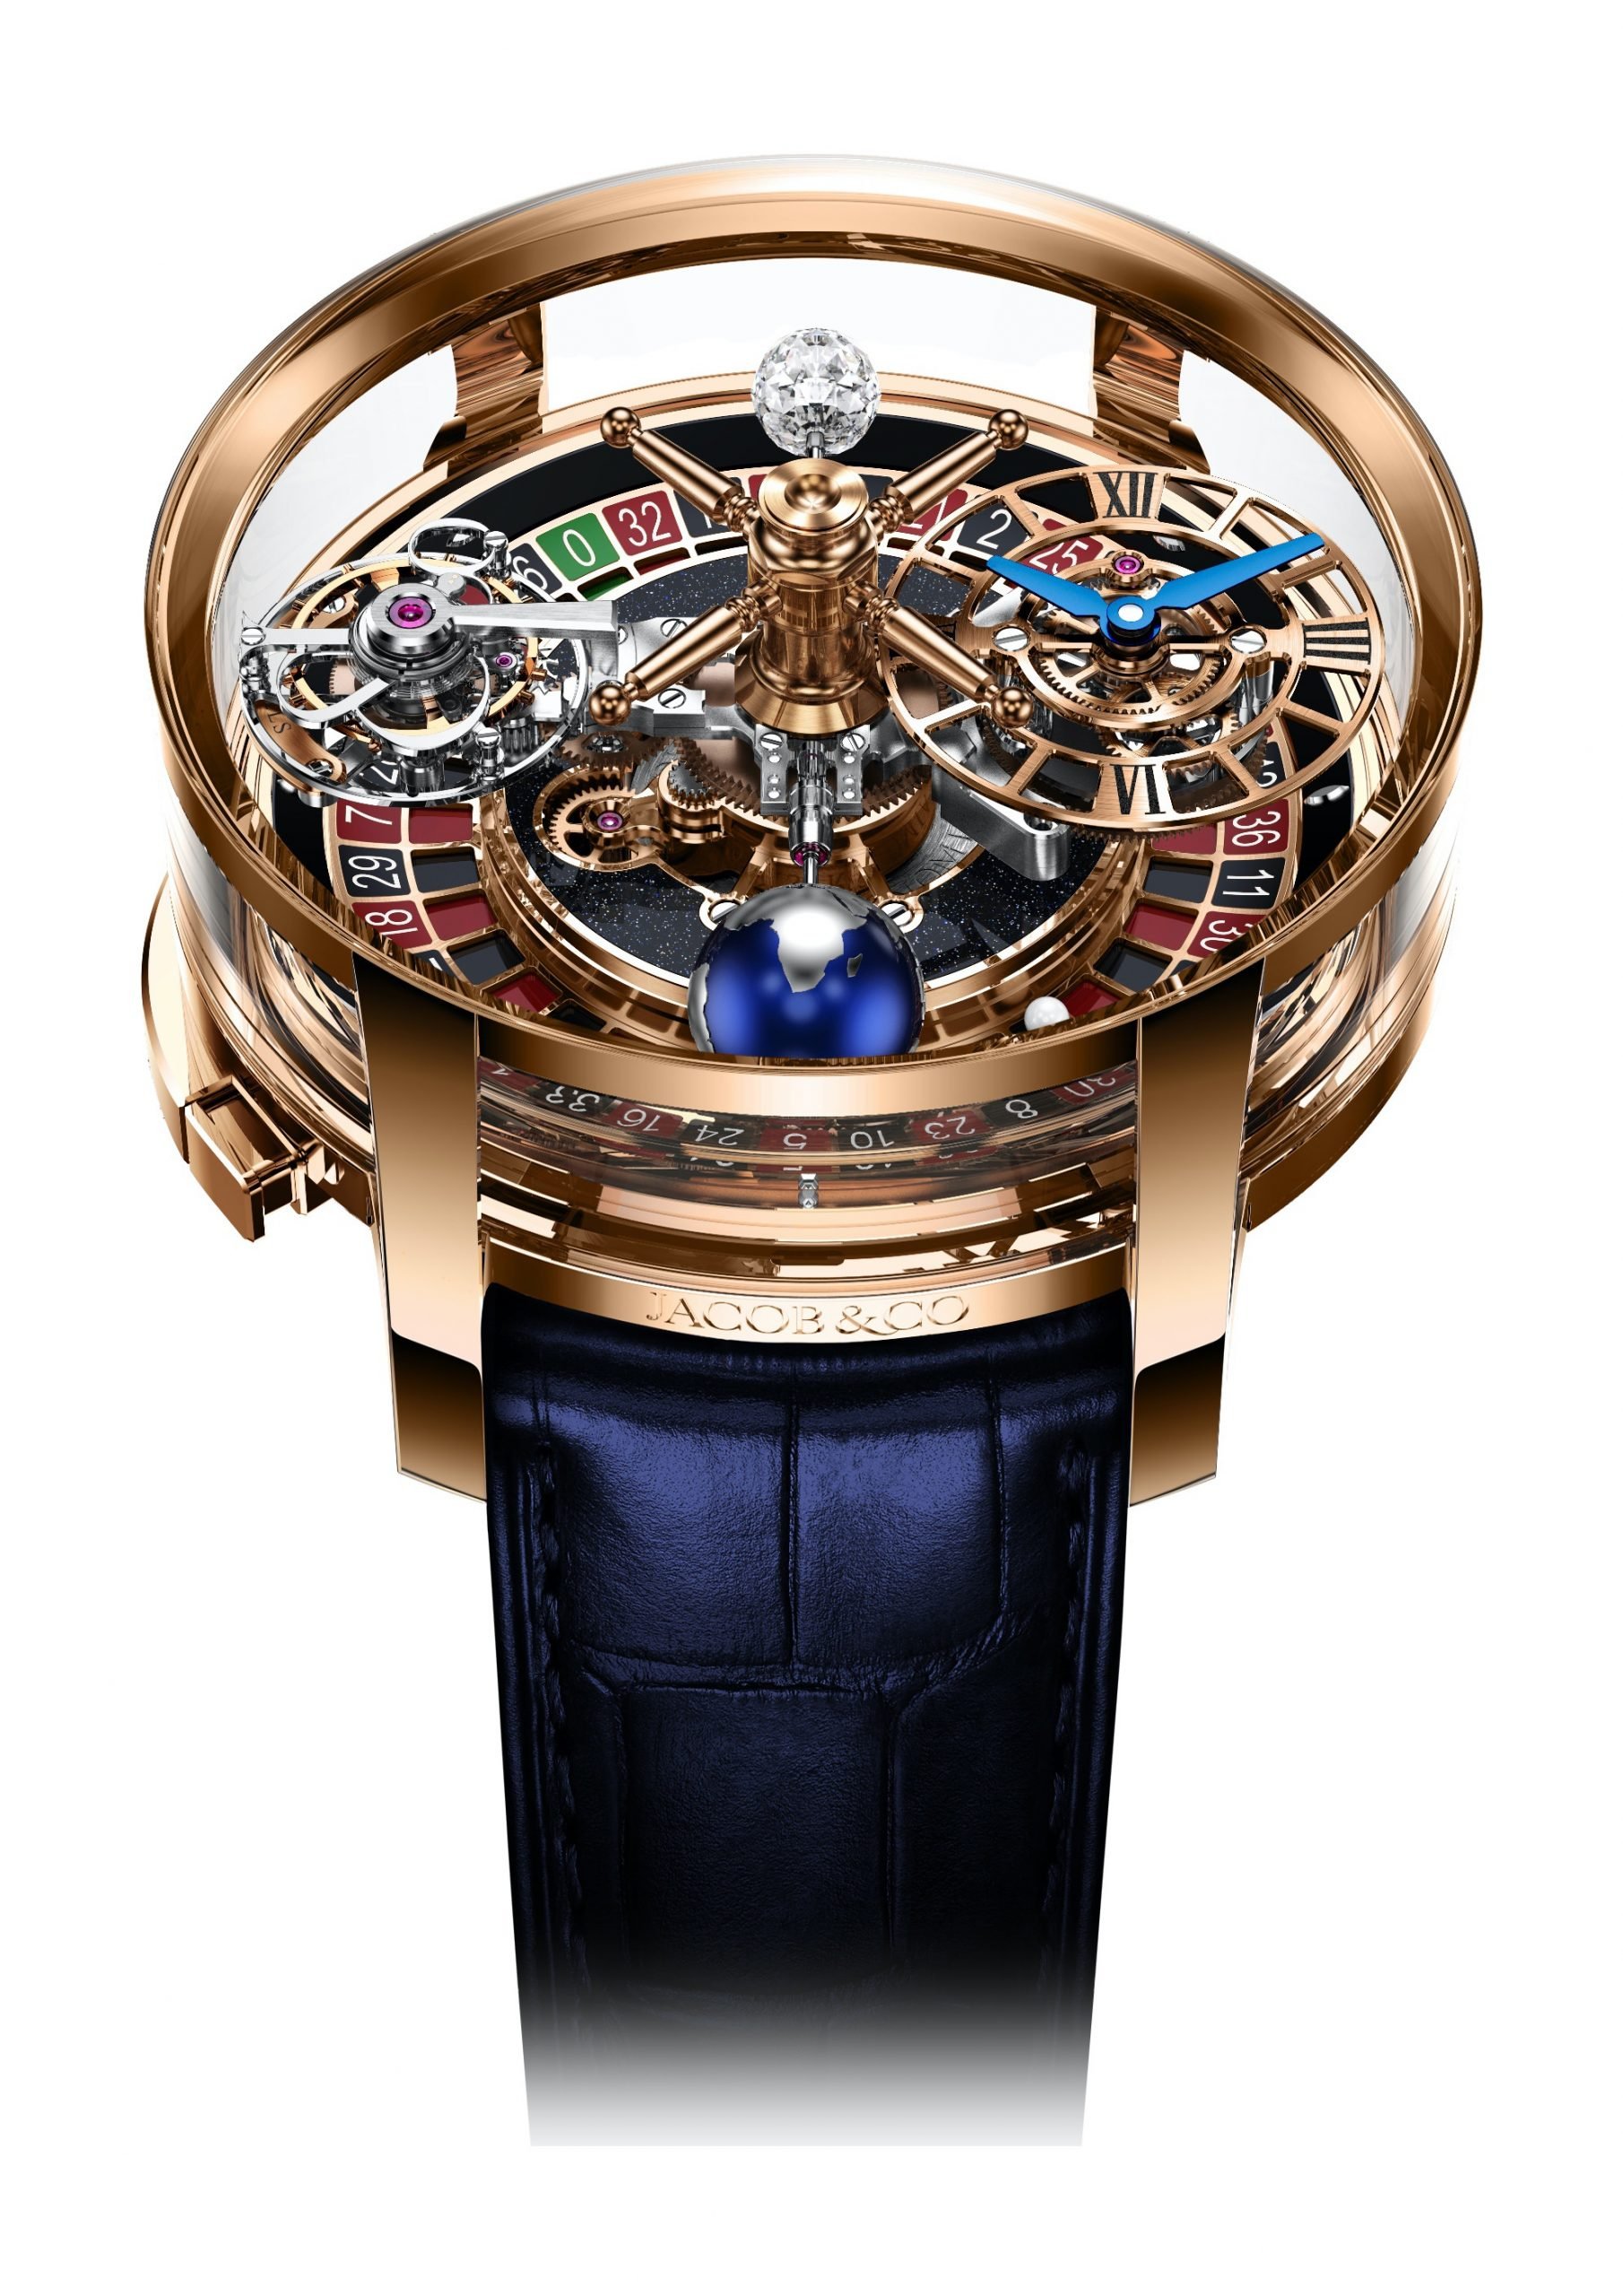 Jacob & Co Astronomia Casino replica watch AT160.40.AA.AA.A